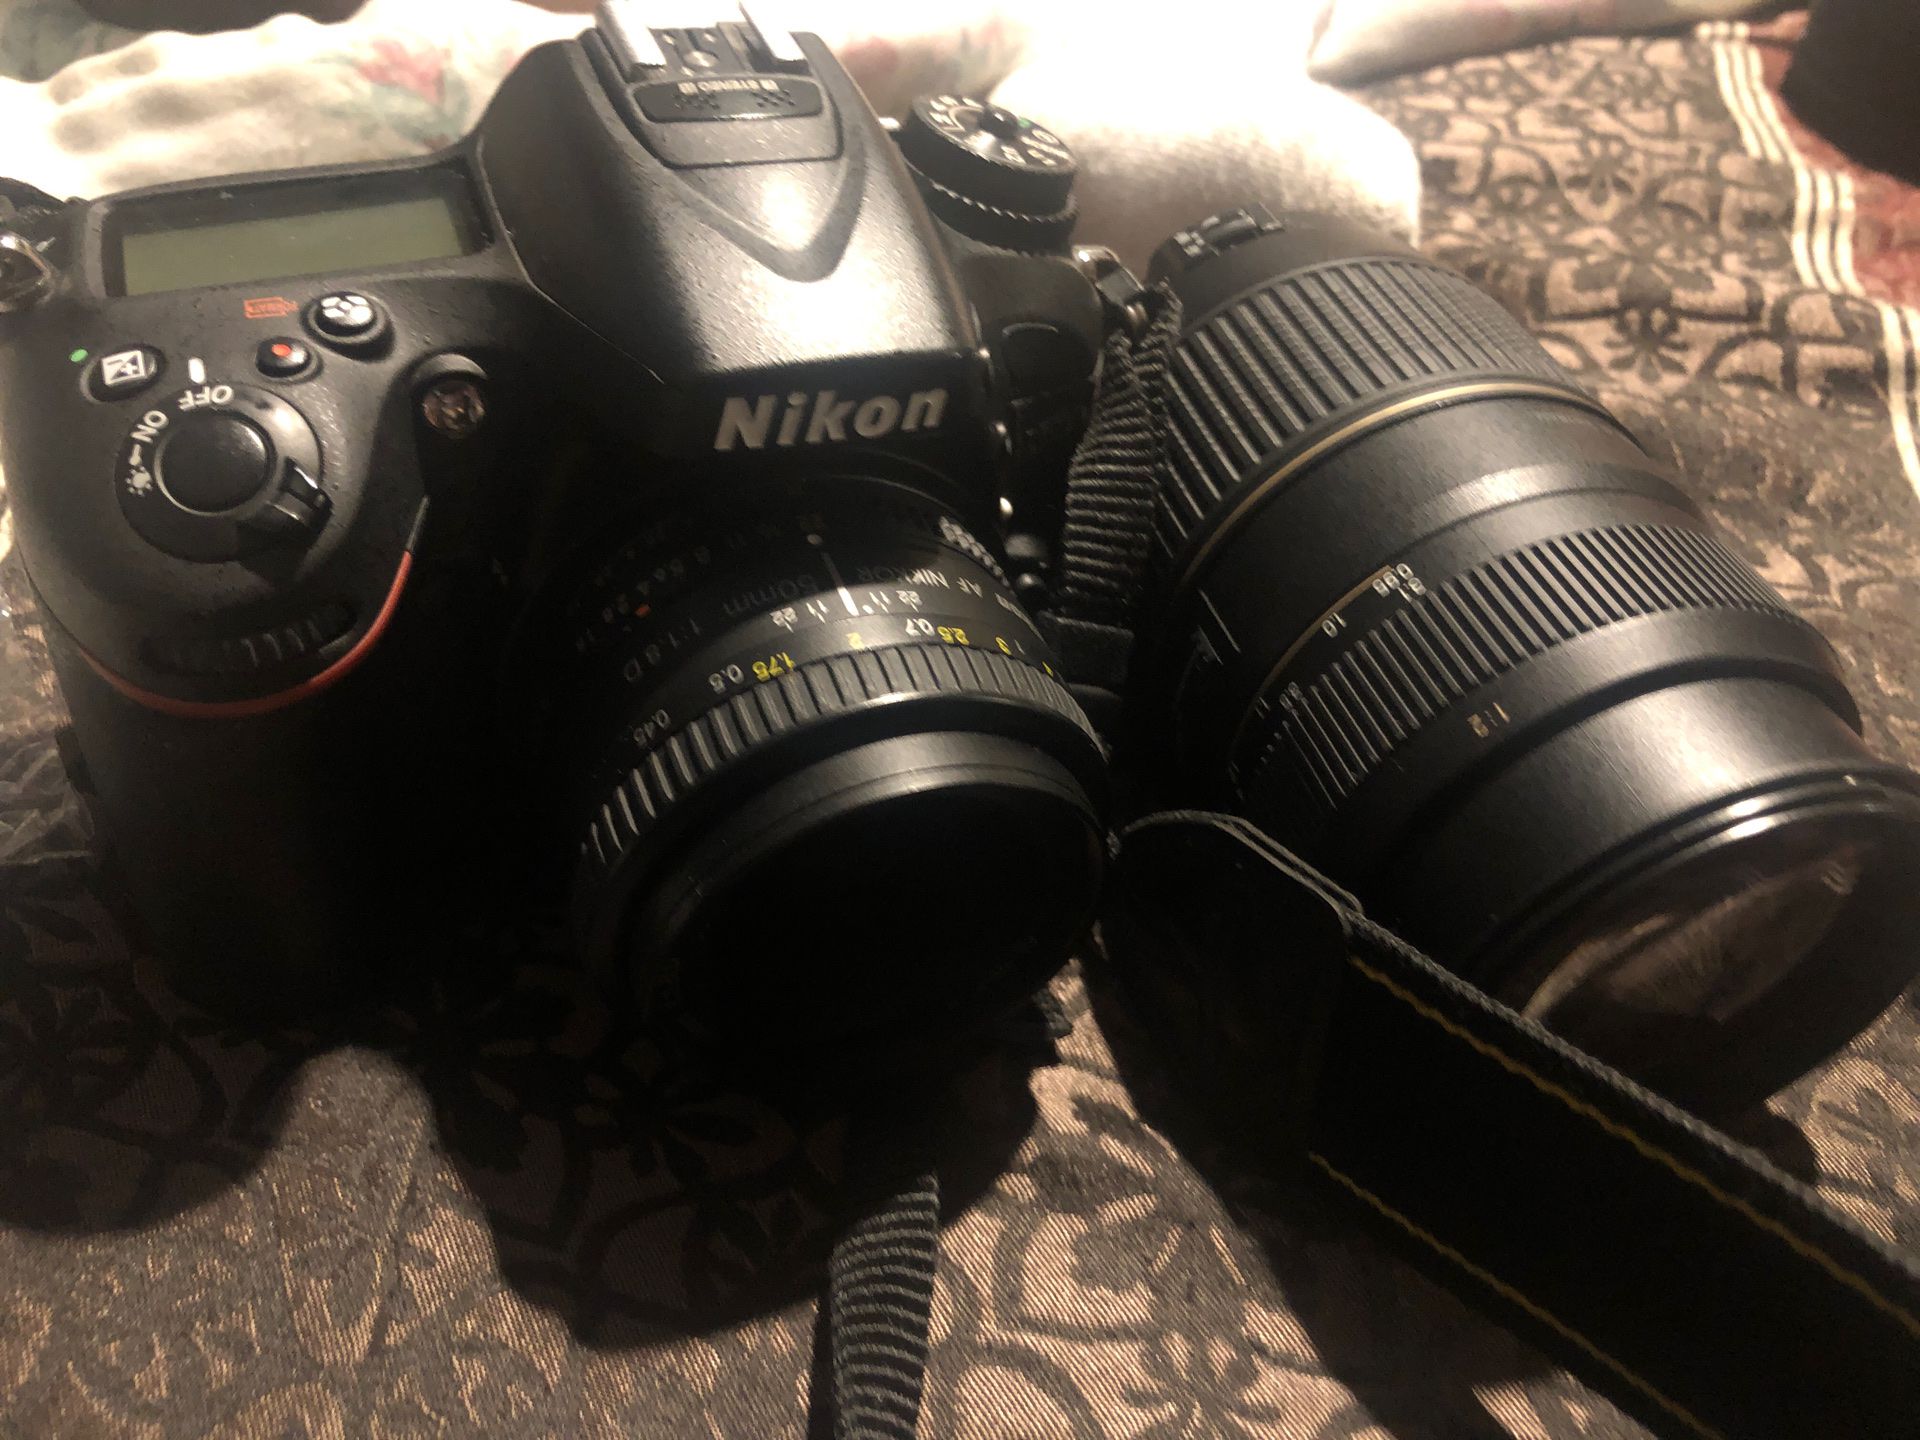 Nikon D7100 with Nikon 50 mm lens and Tamron 70-300 lens